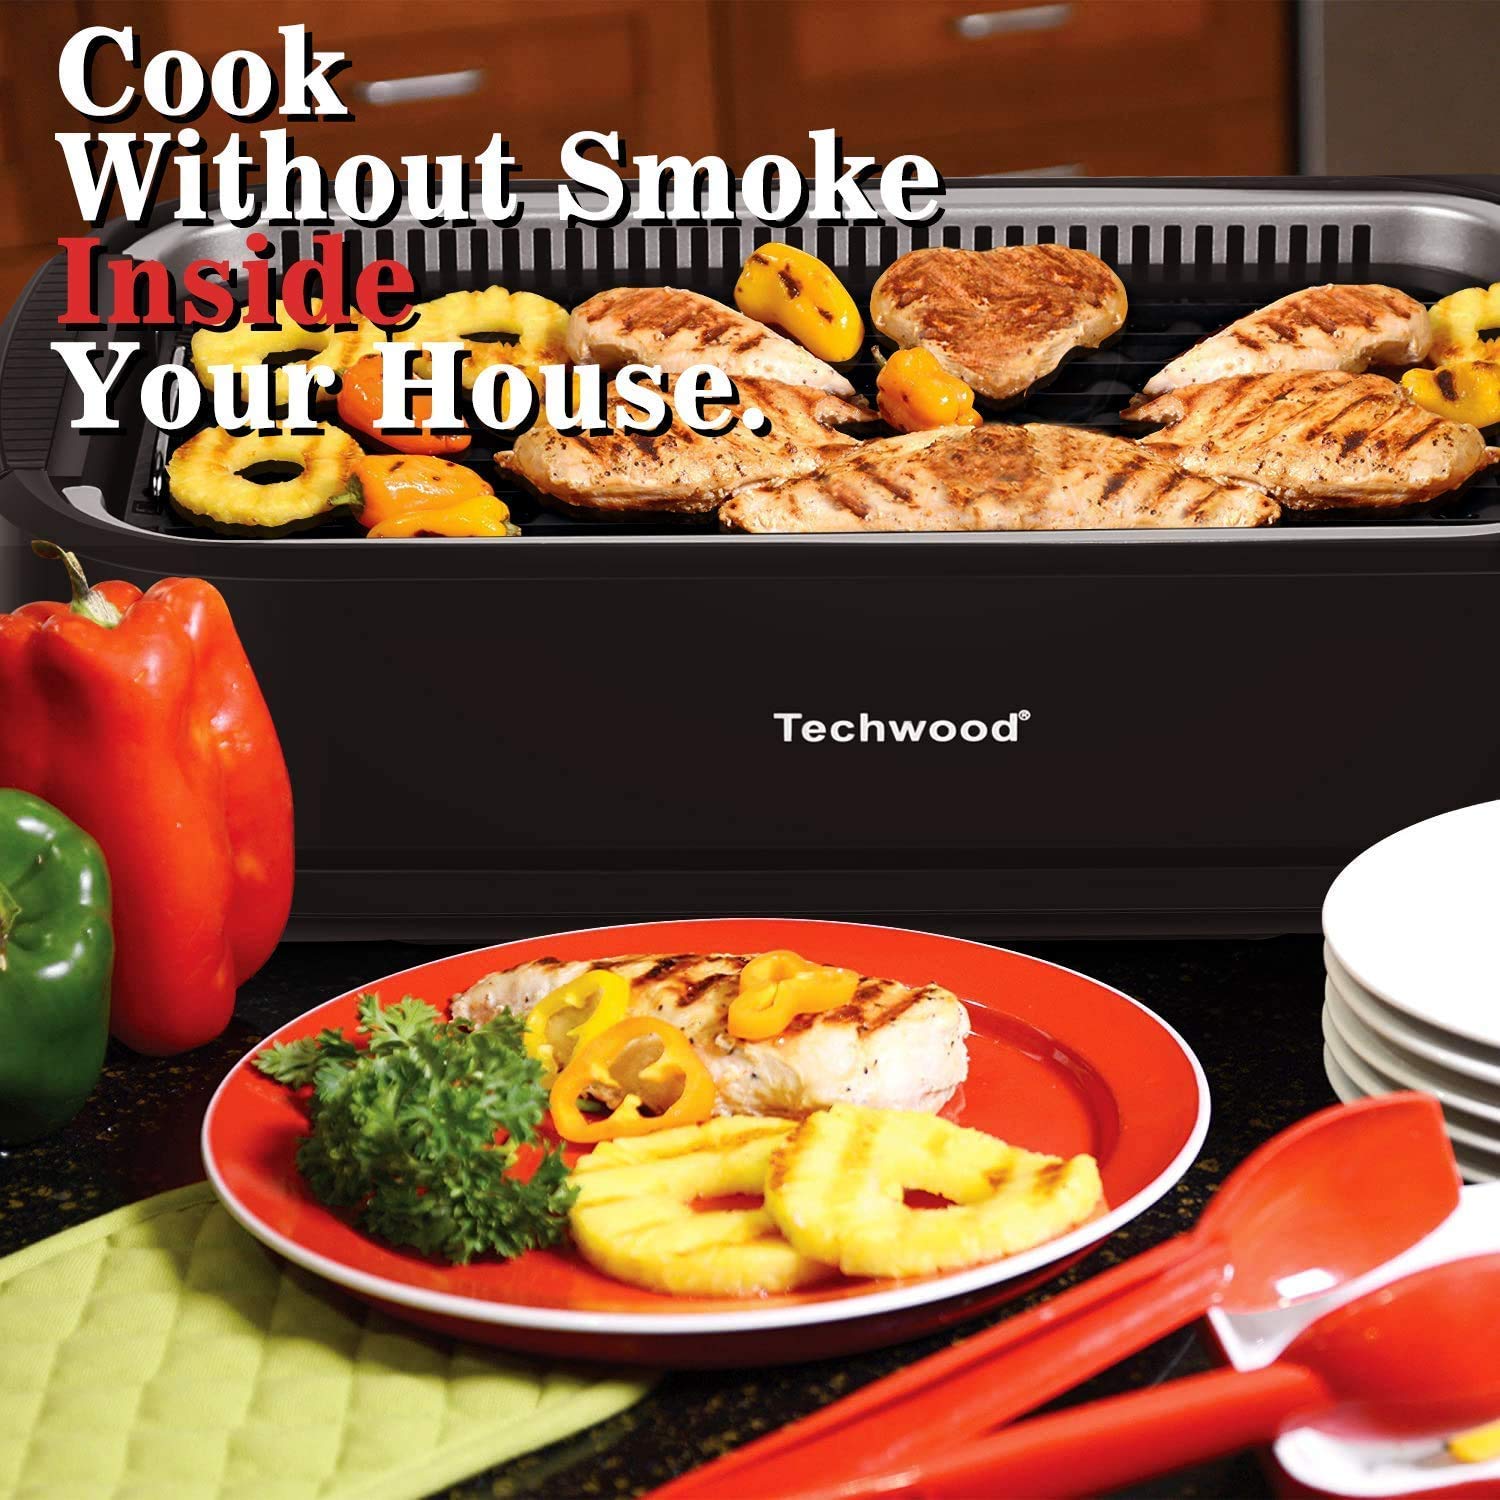 Power XL Smokeless Grill review: smoking hot